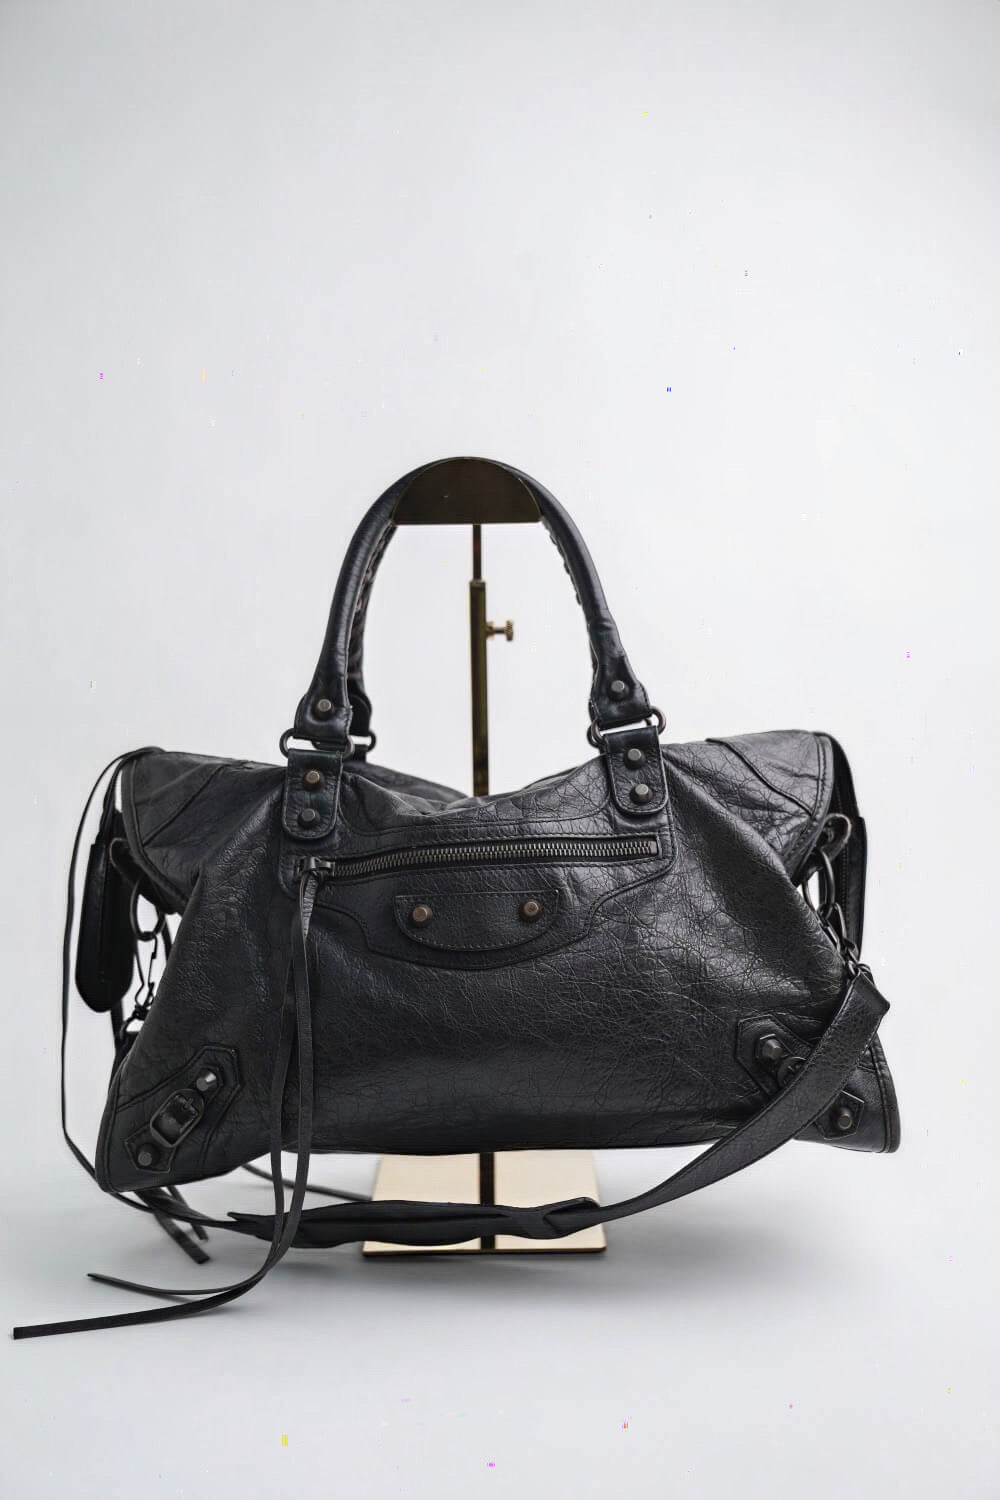 Balenciaga Classic City Bag Black with Receipt